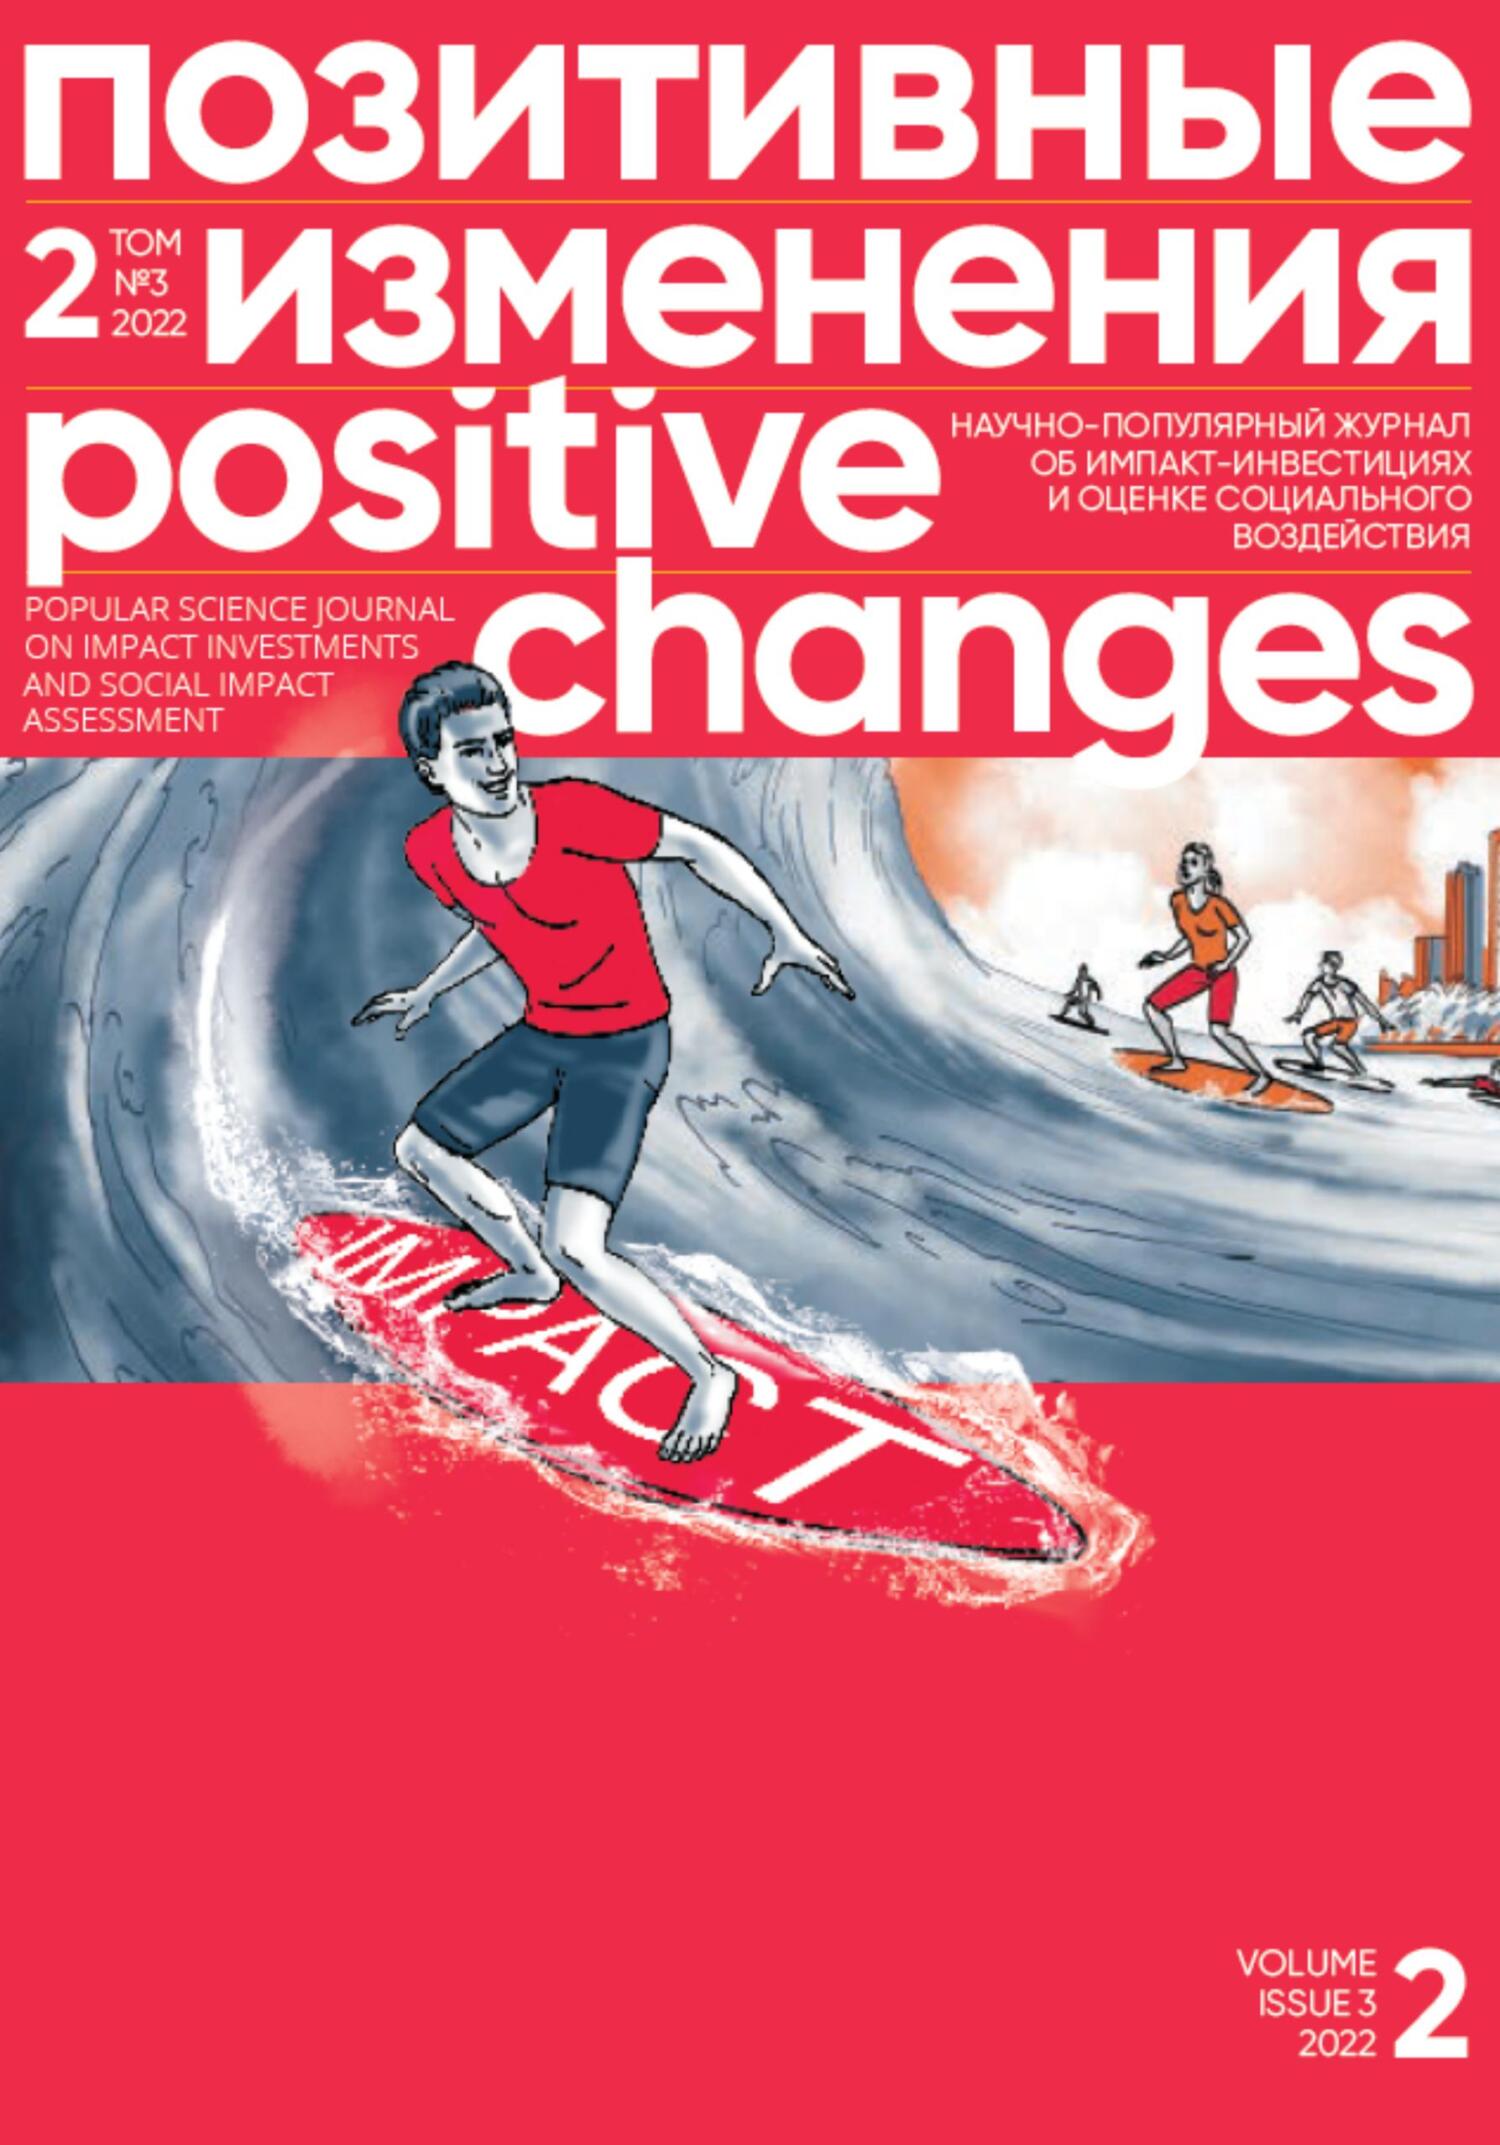 Позитивные изменения. Том 2, № 3 (2022). Positive changes. Volume 2, Issue 3 (2022) - Редакция журнала «Позитивные изменения»